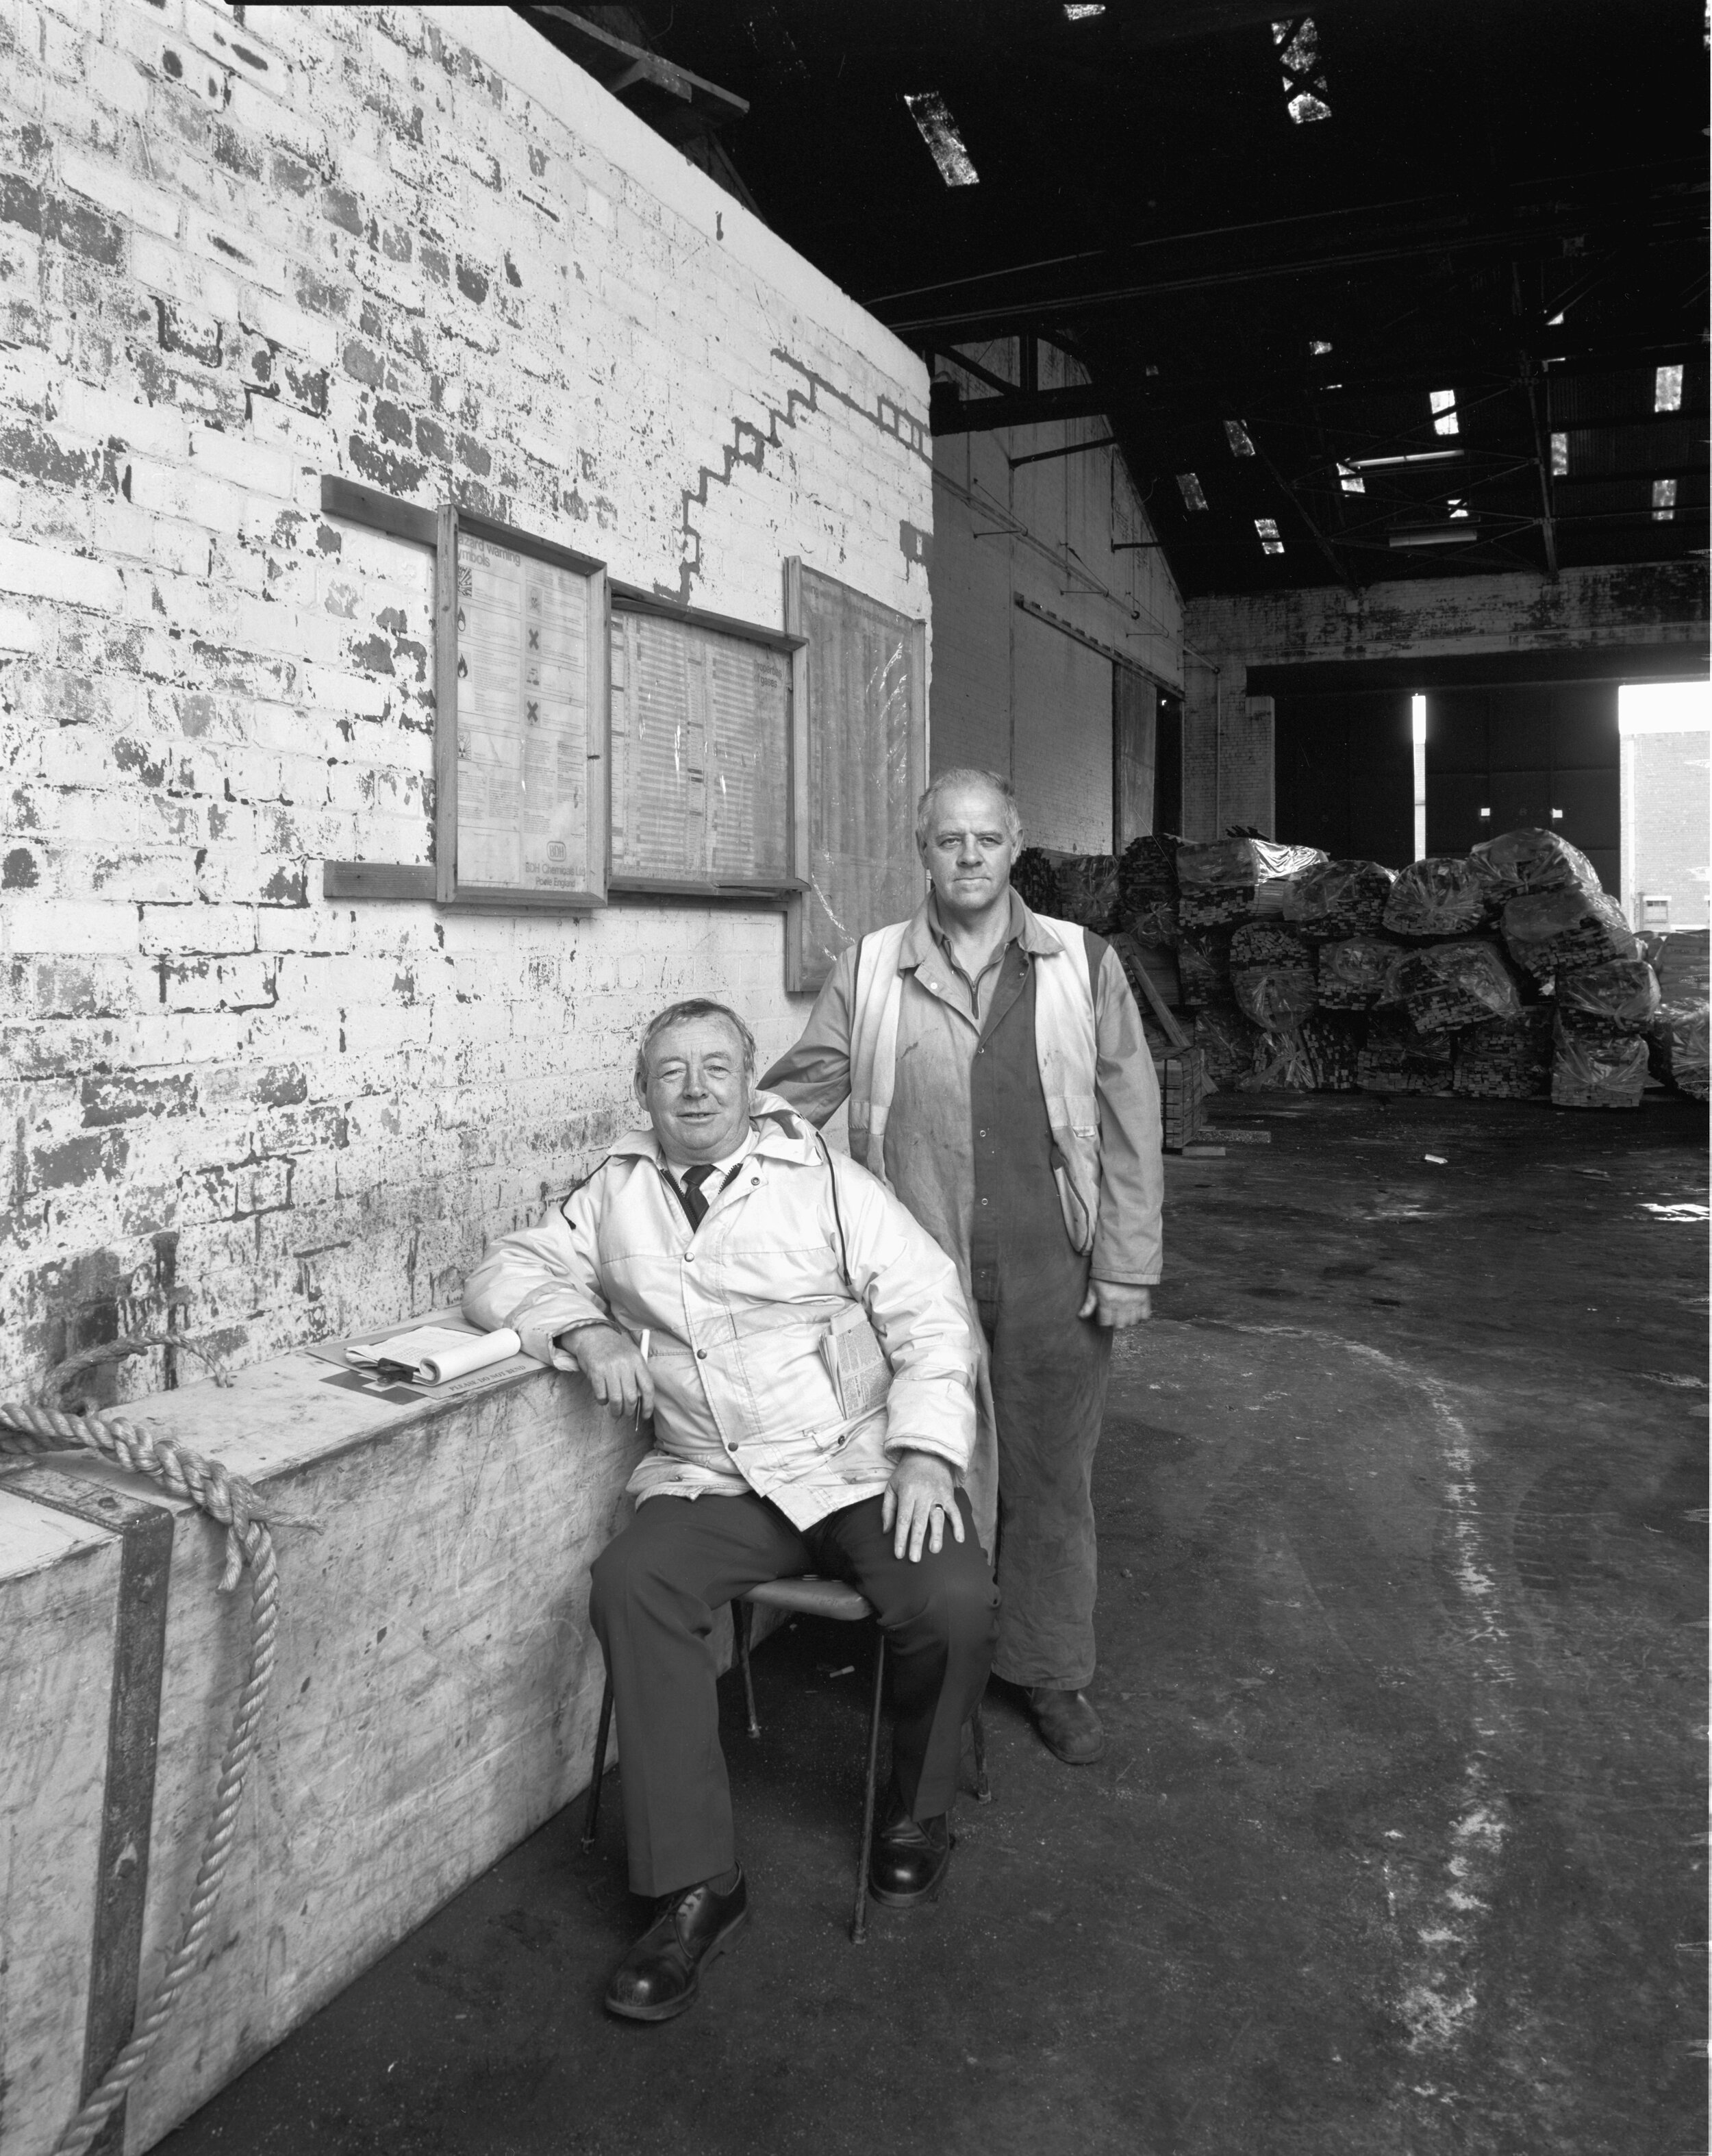 JOE MURPHY (seated) & JHON SIMMELEAER (The Bullet) CANADA DOCK AUGUST 1994  